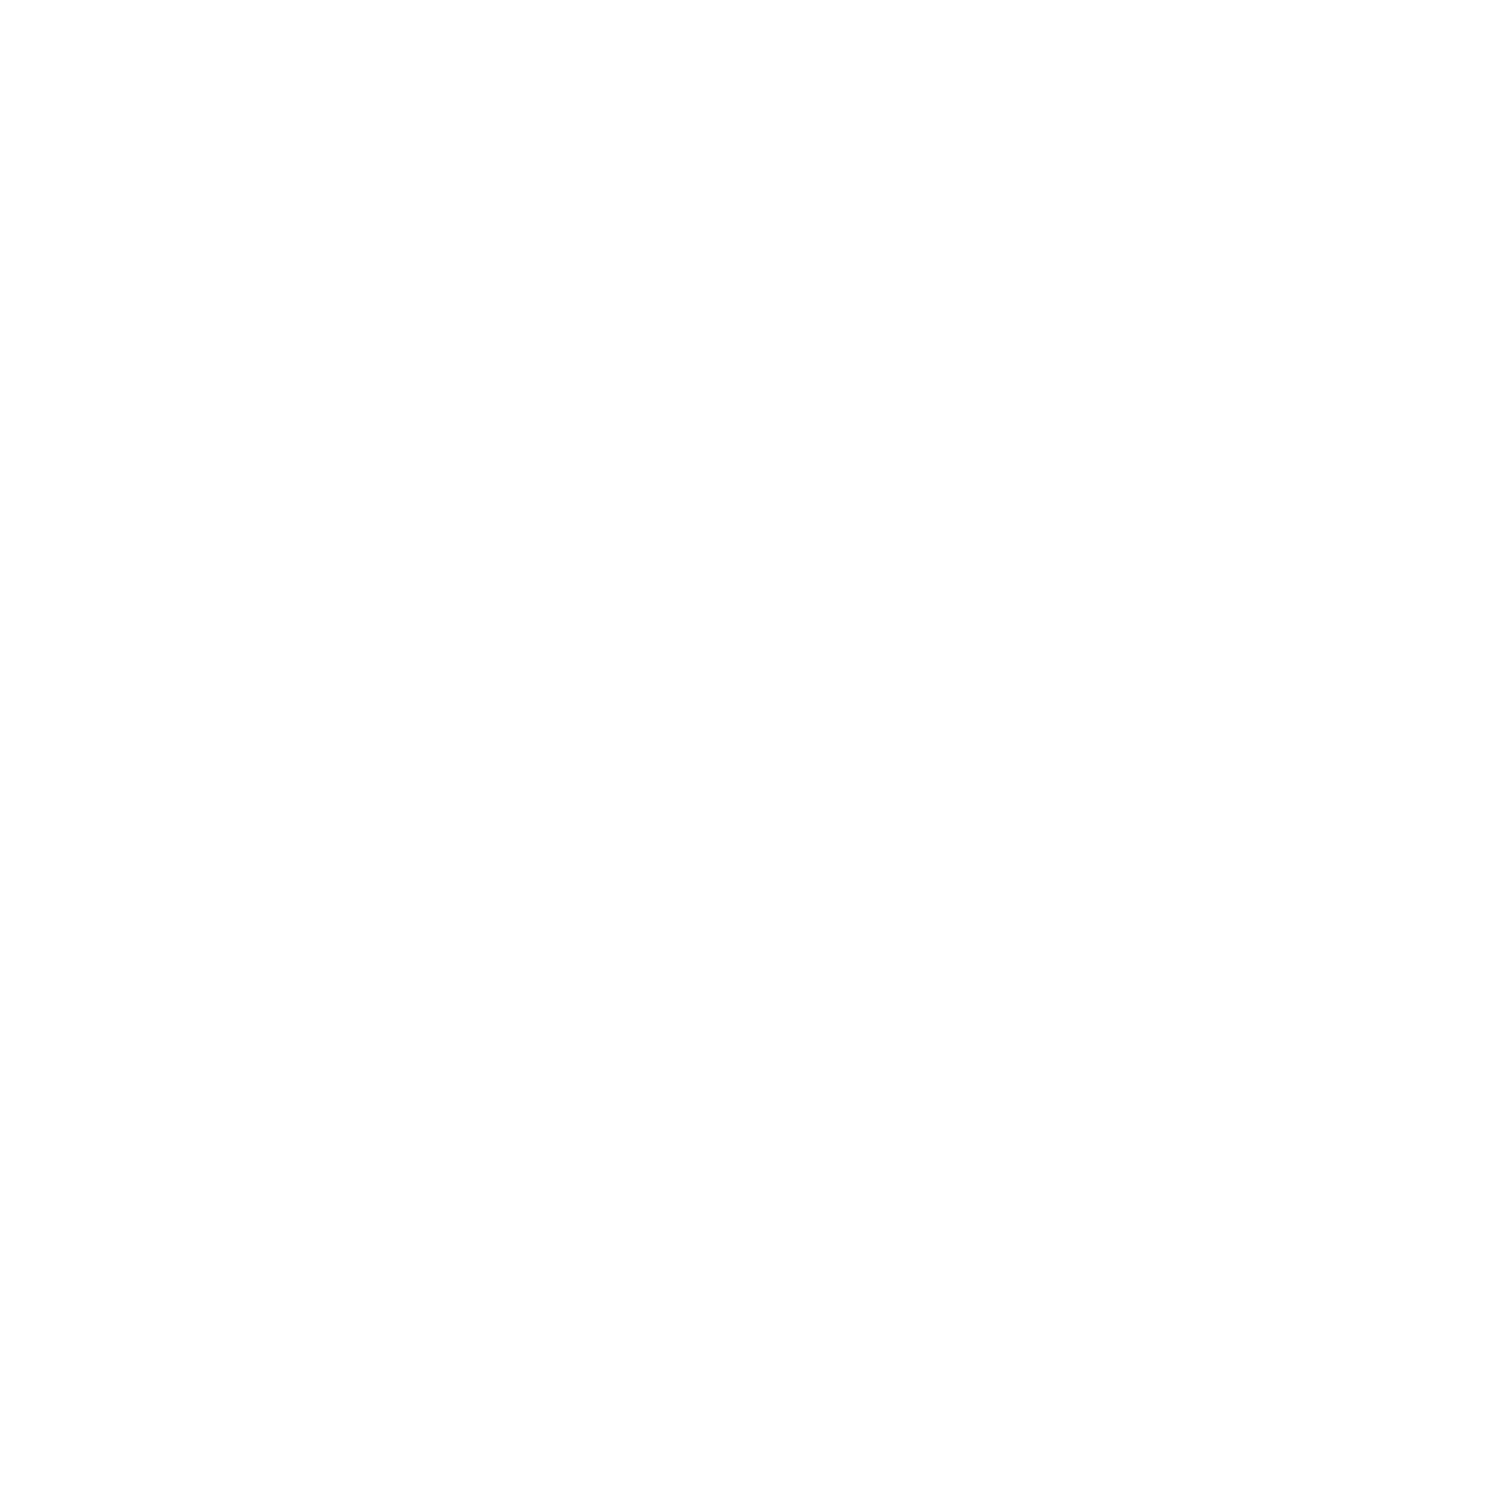 Spirit House Records